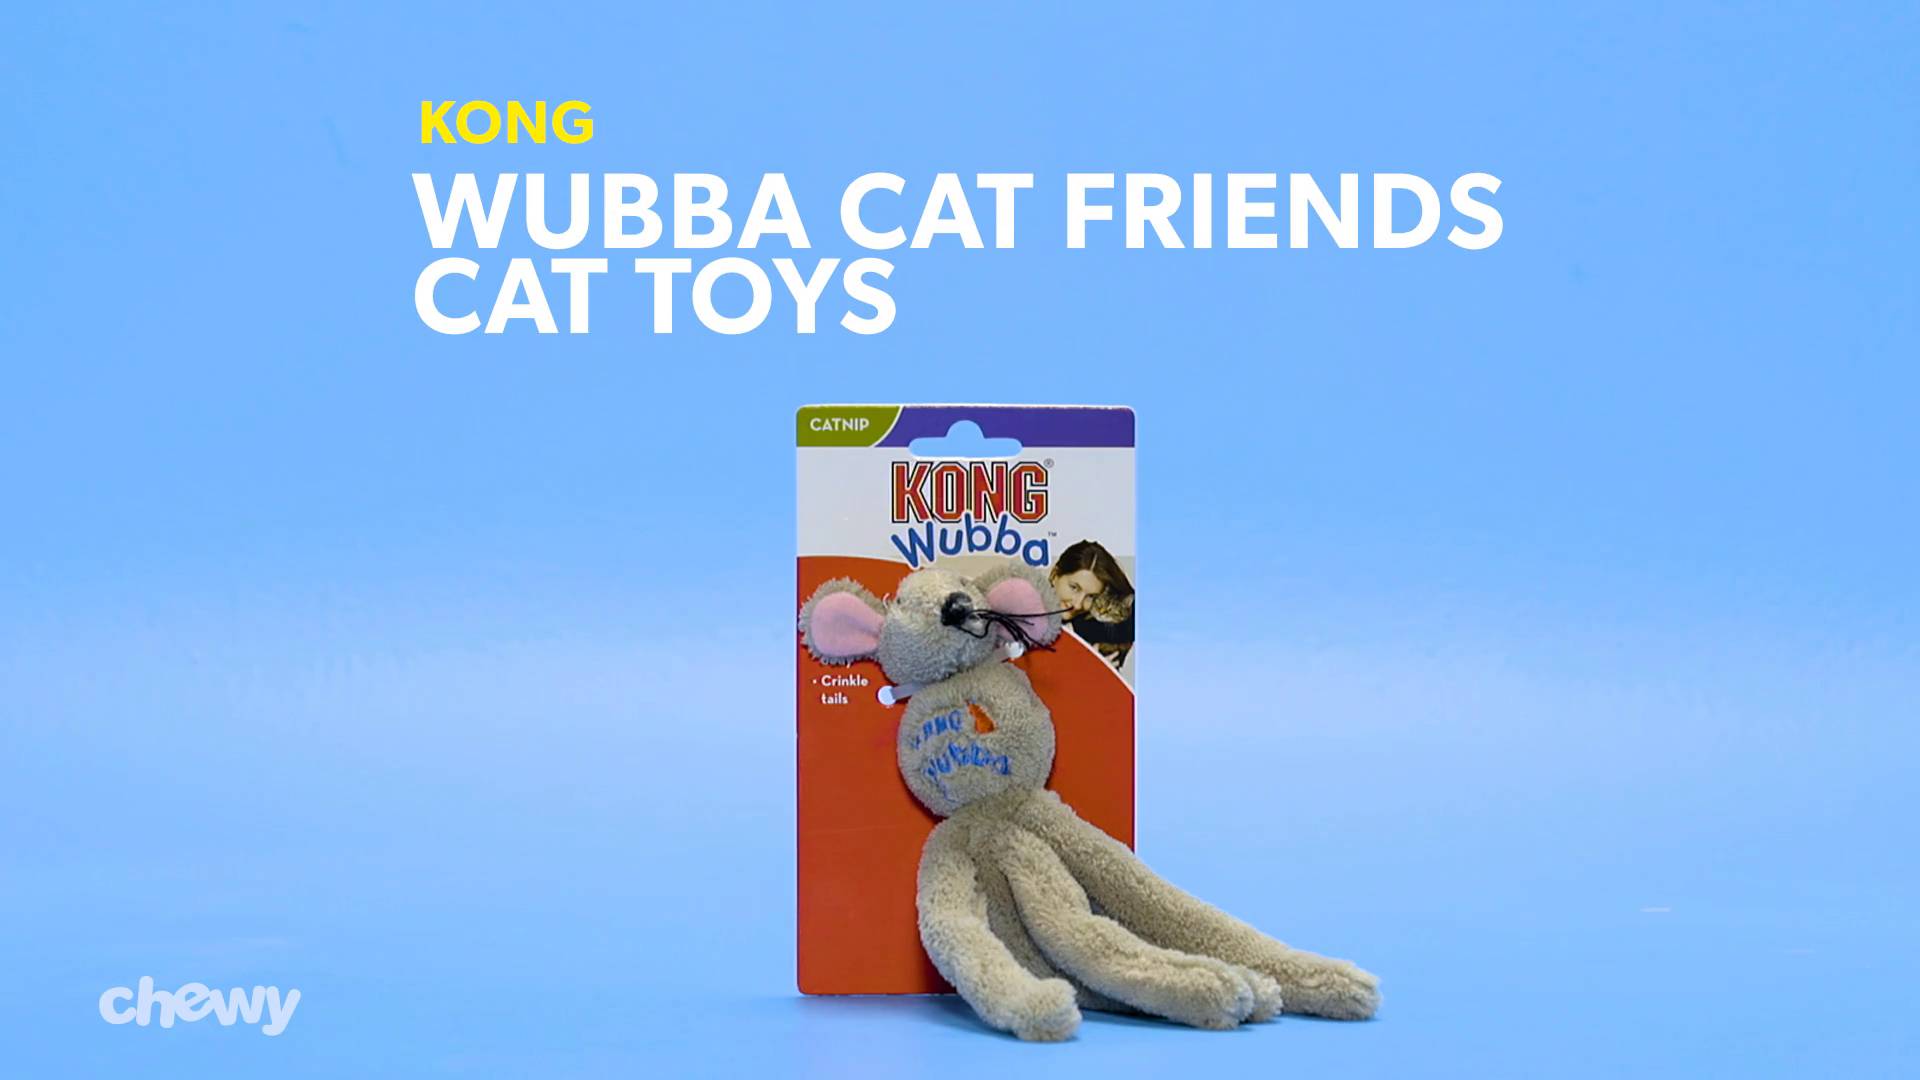 wubba cat toy